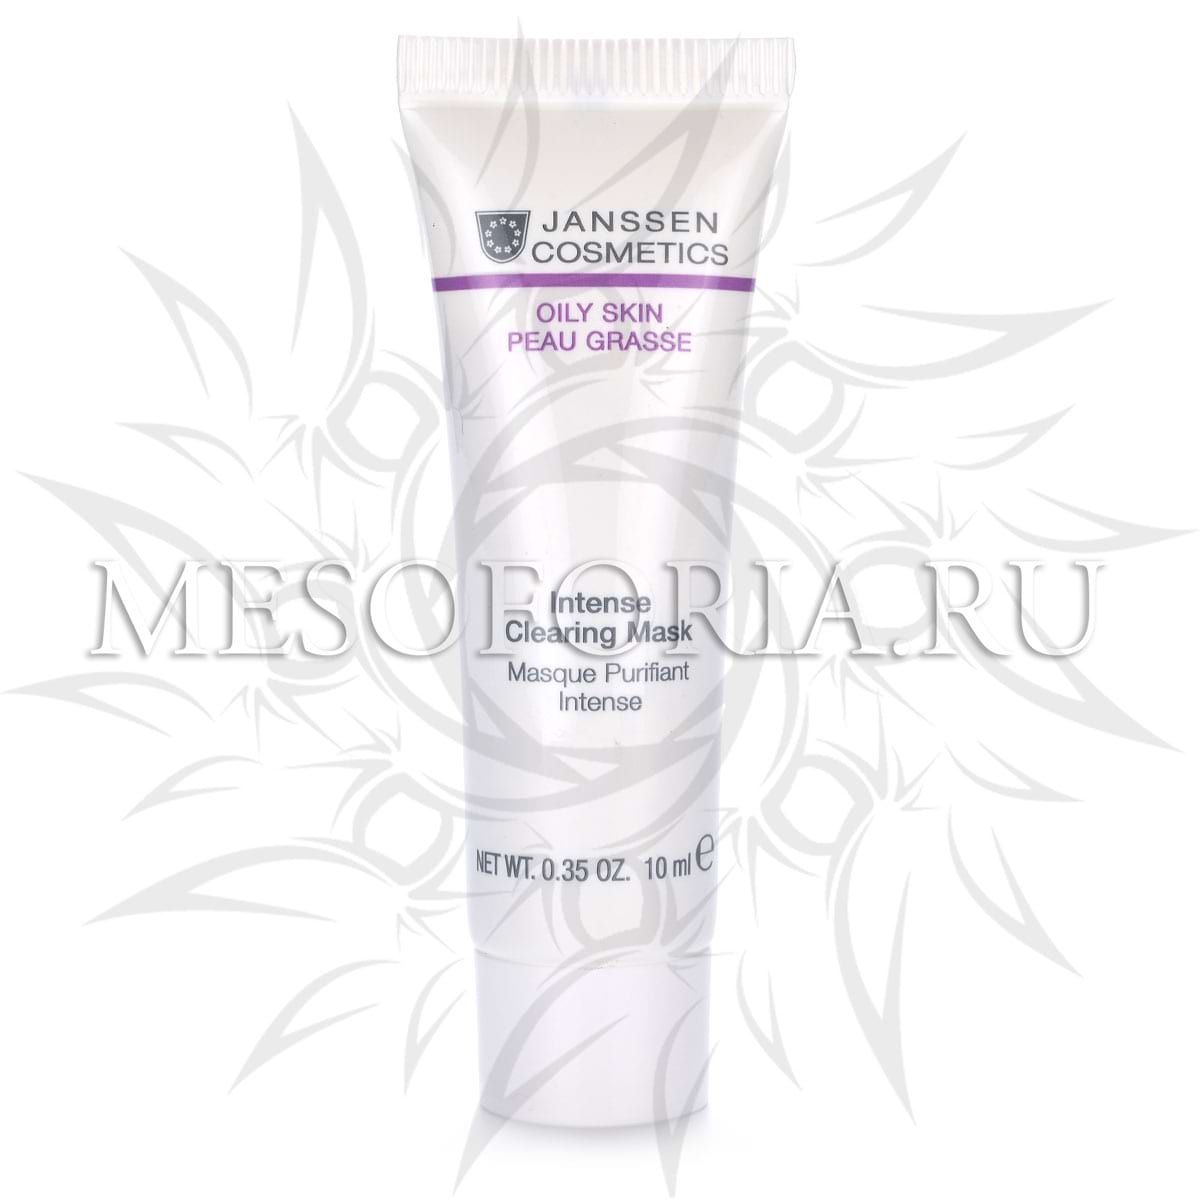 Интенсивно очищающая маска / Intense Clearing Mask, Oily Skin, Janssen Cosmetics (Янсен косметика), 10 мл